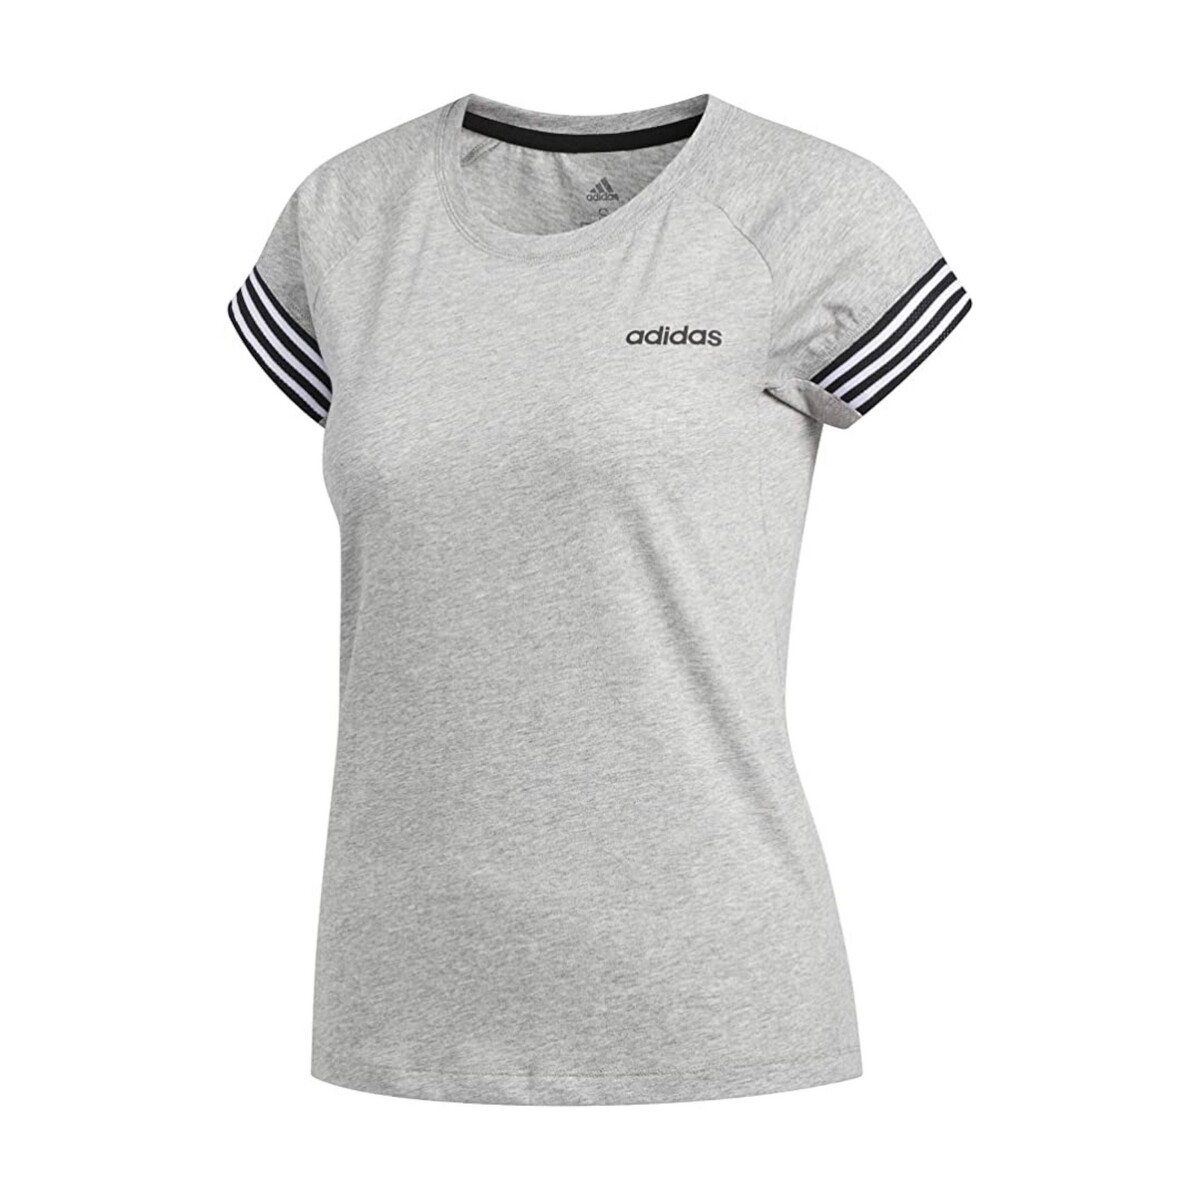 Kleidung Damen T-Shirts adidas Originals DT1660 Grau